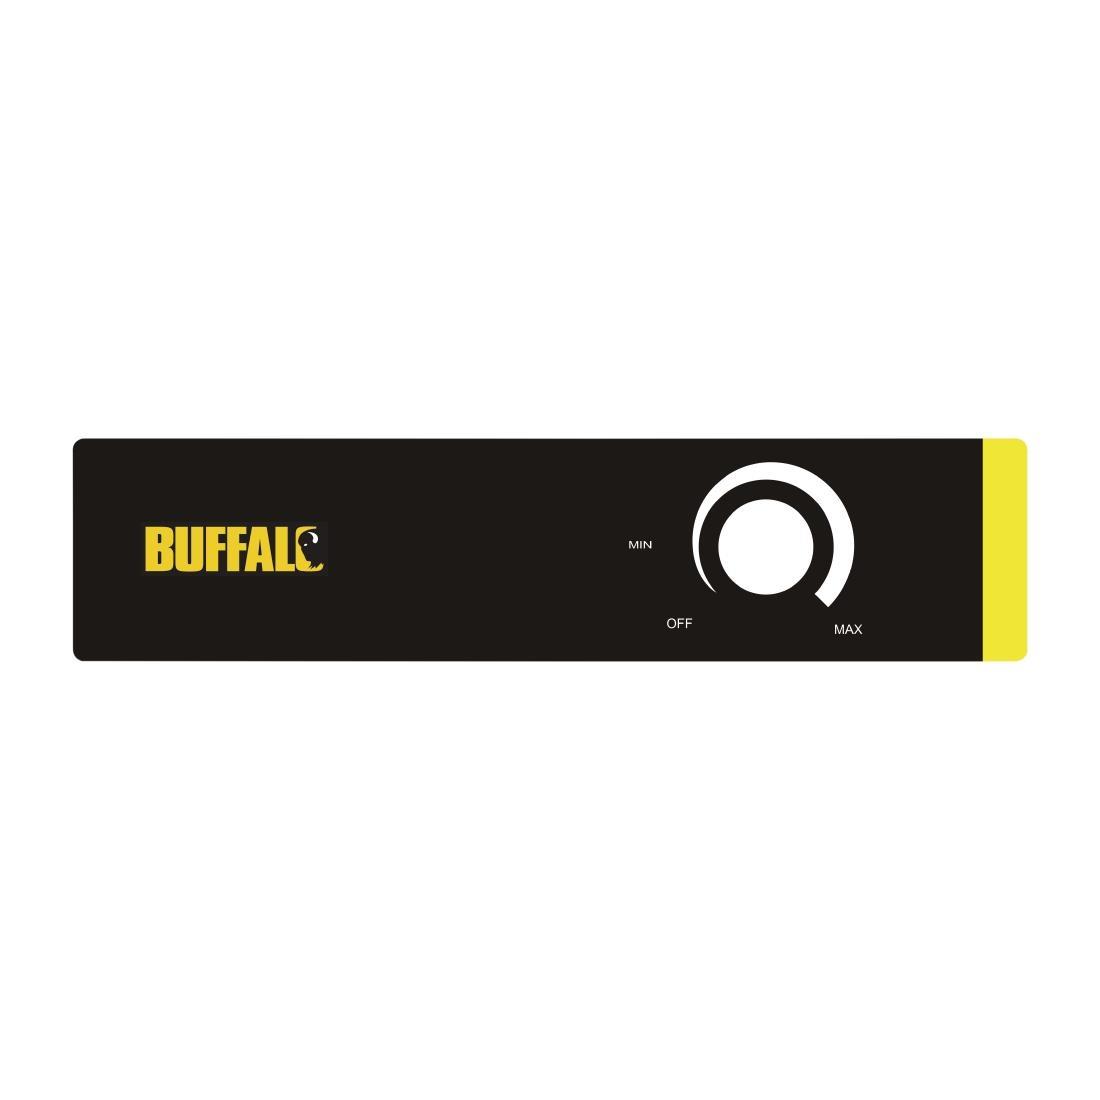 Buffalo Control Panel Sticker - AD156  - 1